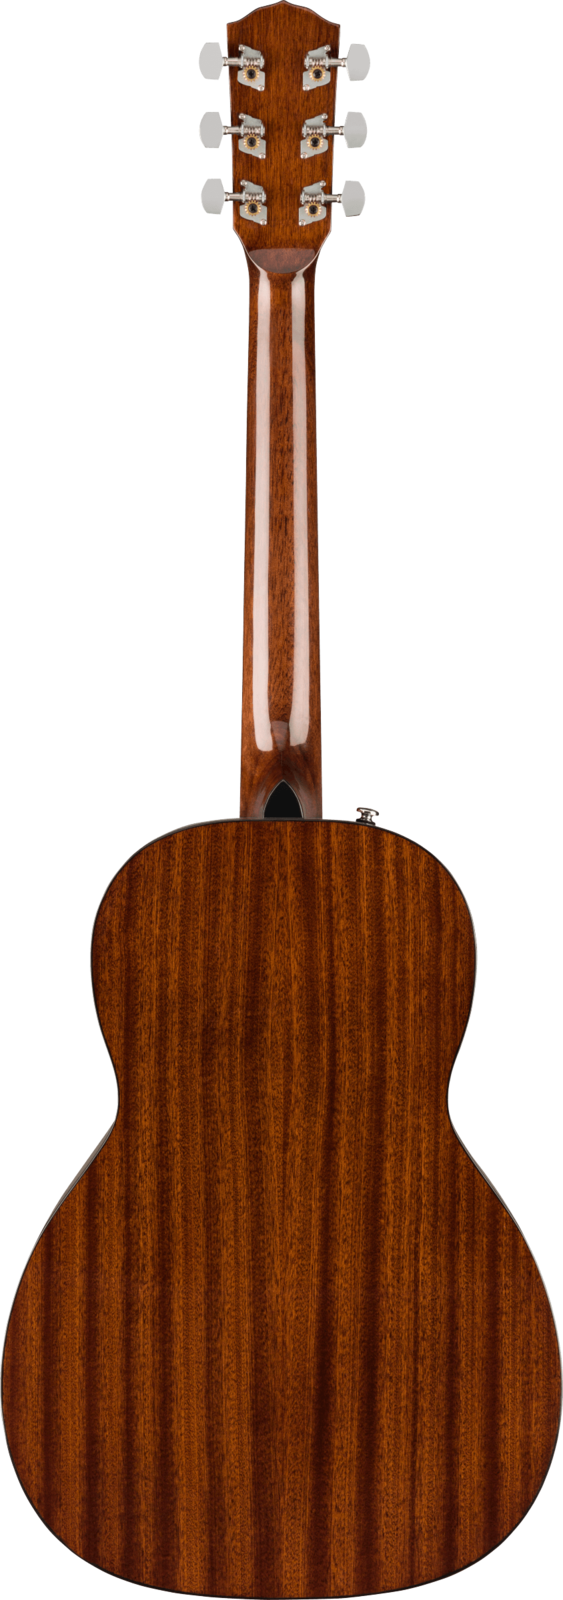 Fender CP-60S Parlor Sunburst